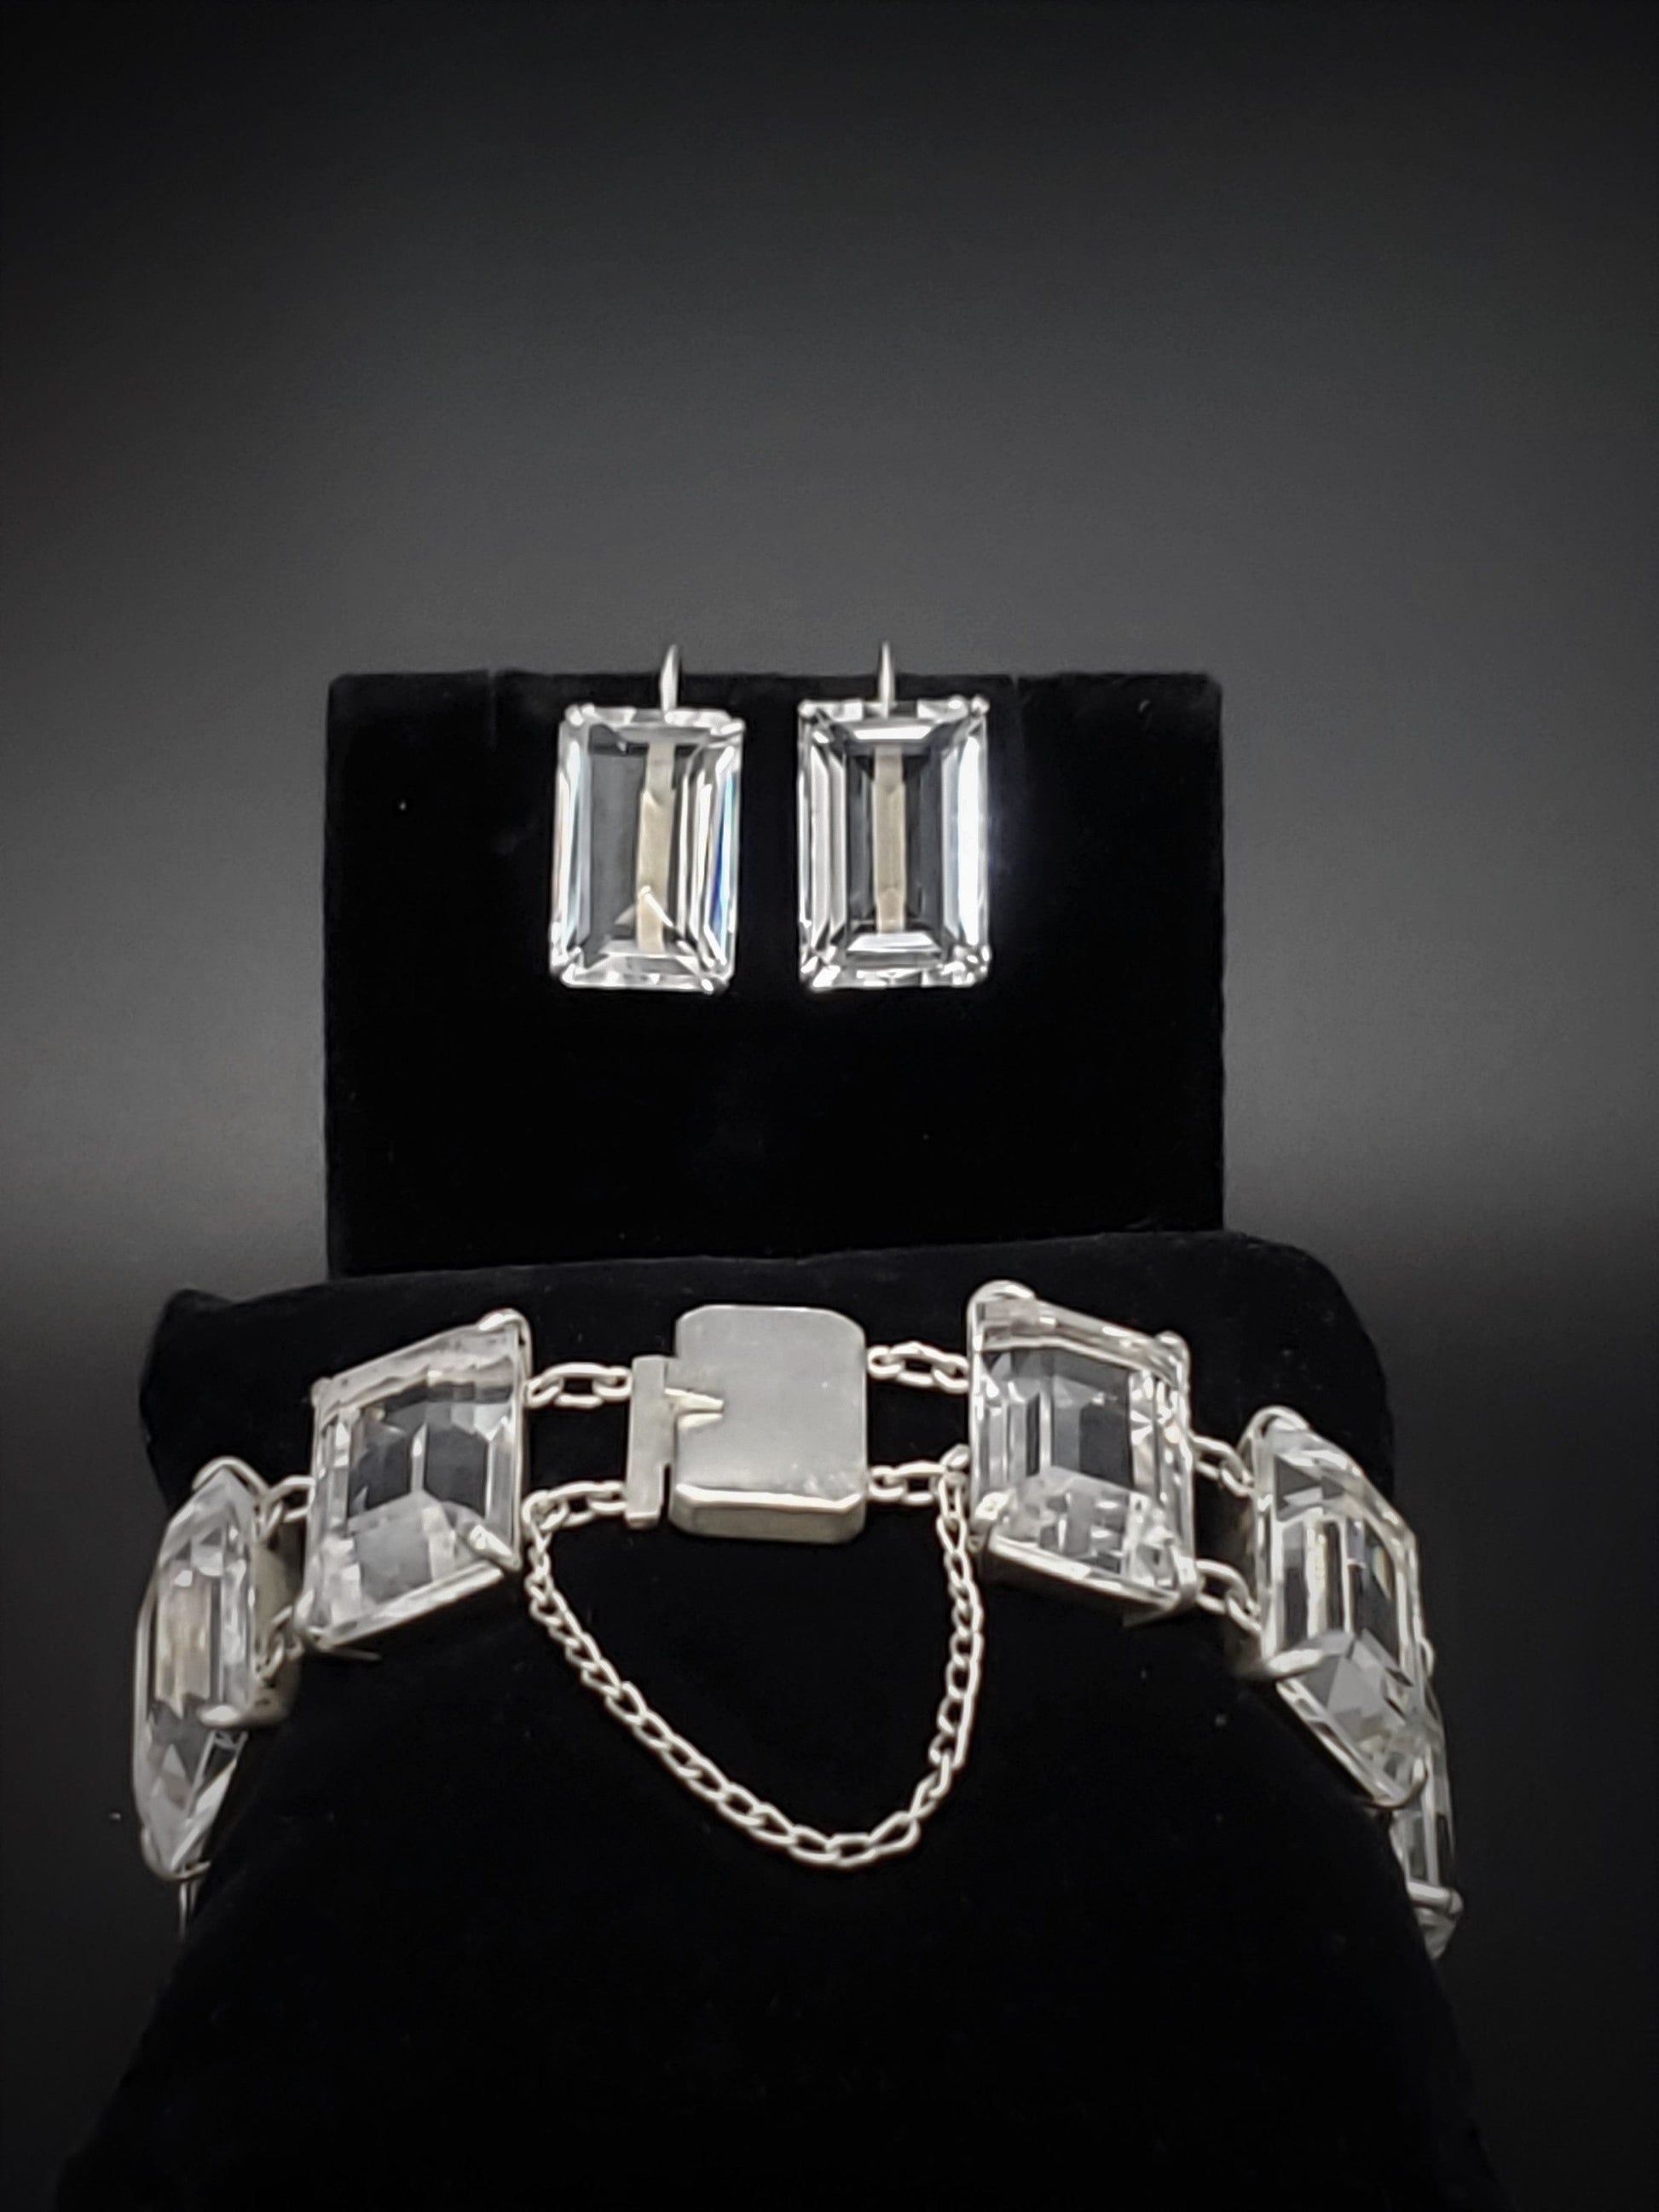 Japan Silver Jewelry Superb Japanese Sterling Art Deco Quartz Crystal Bracelet Earrings SET 1930s